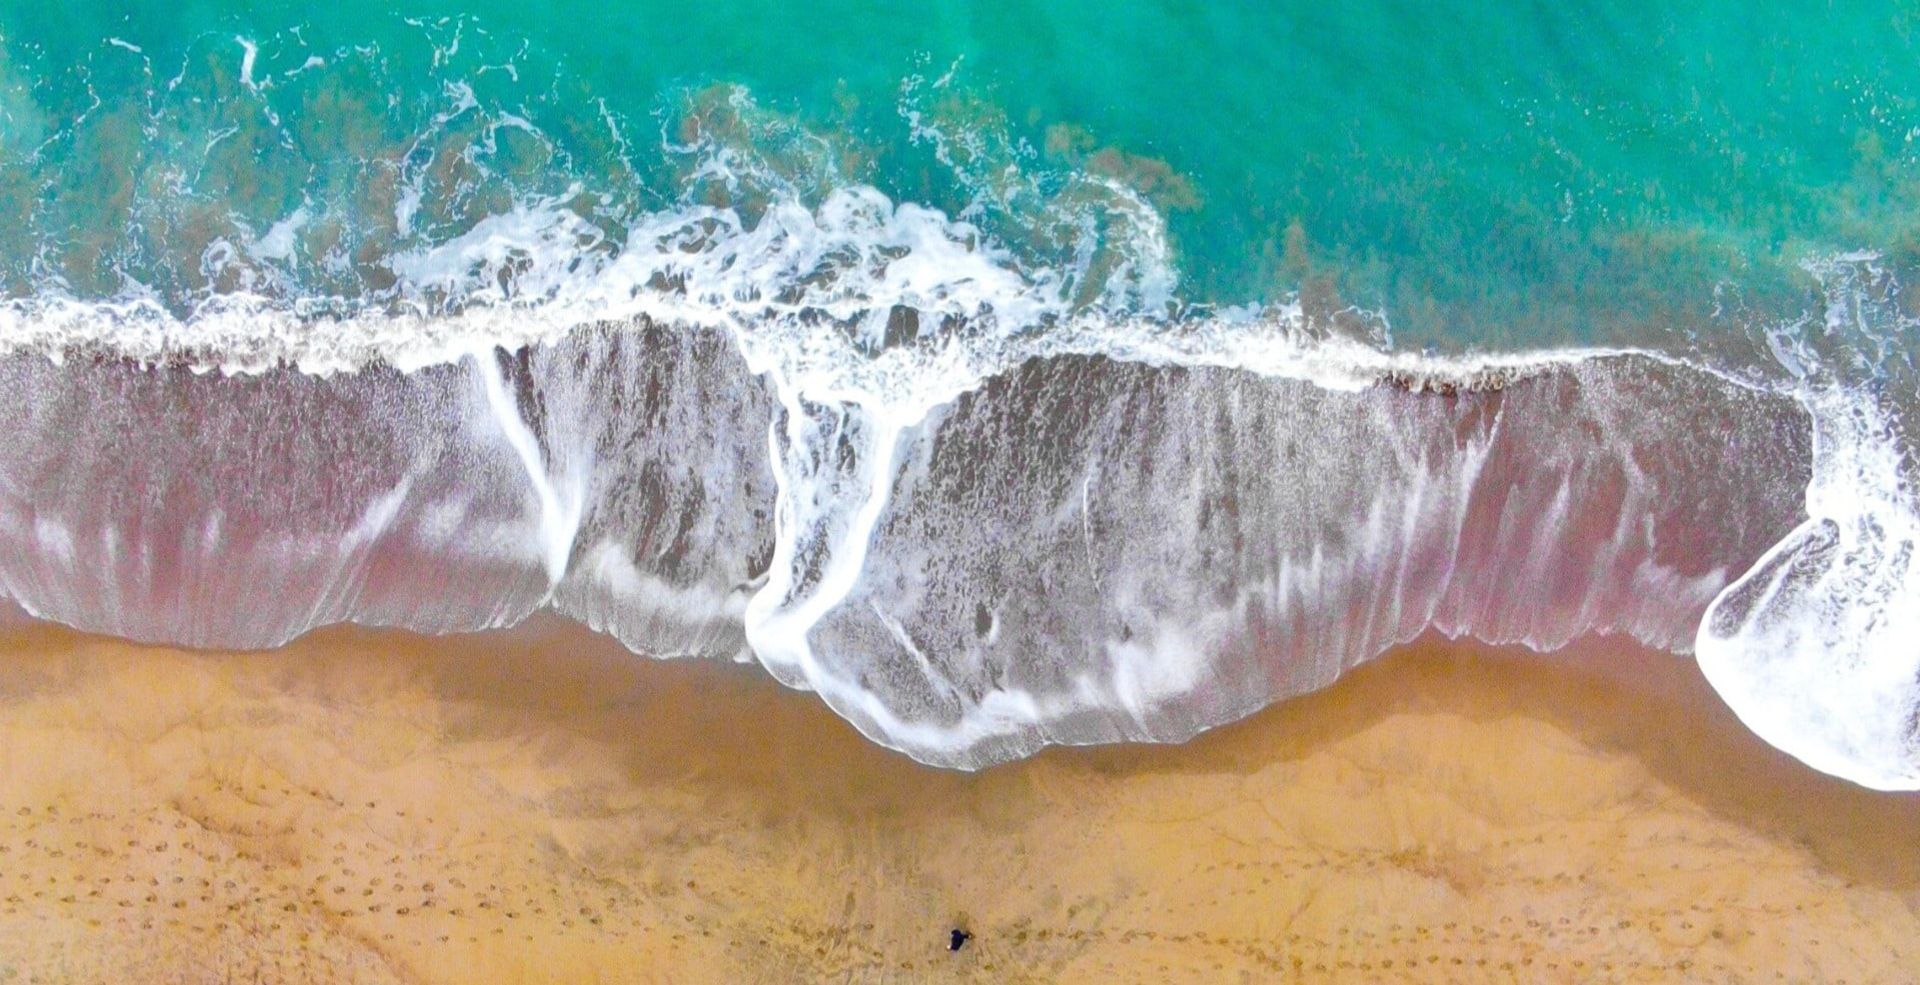 birds view of ocean waves on a beach